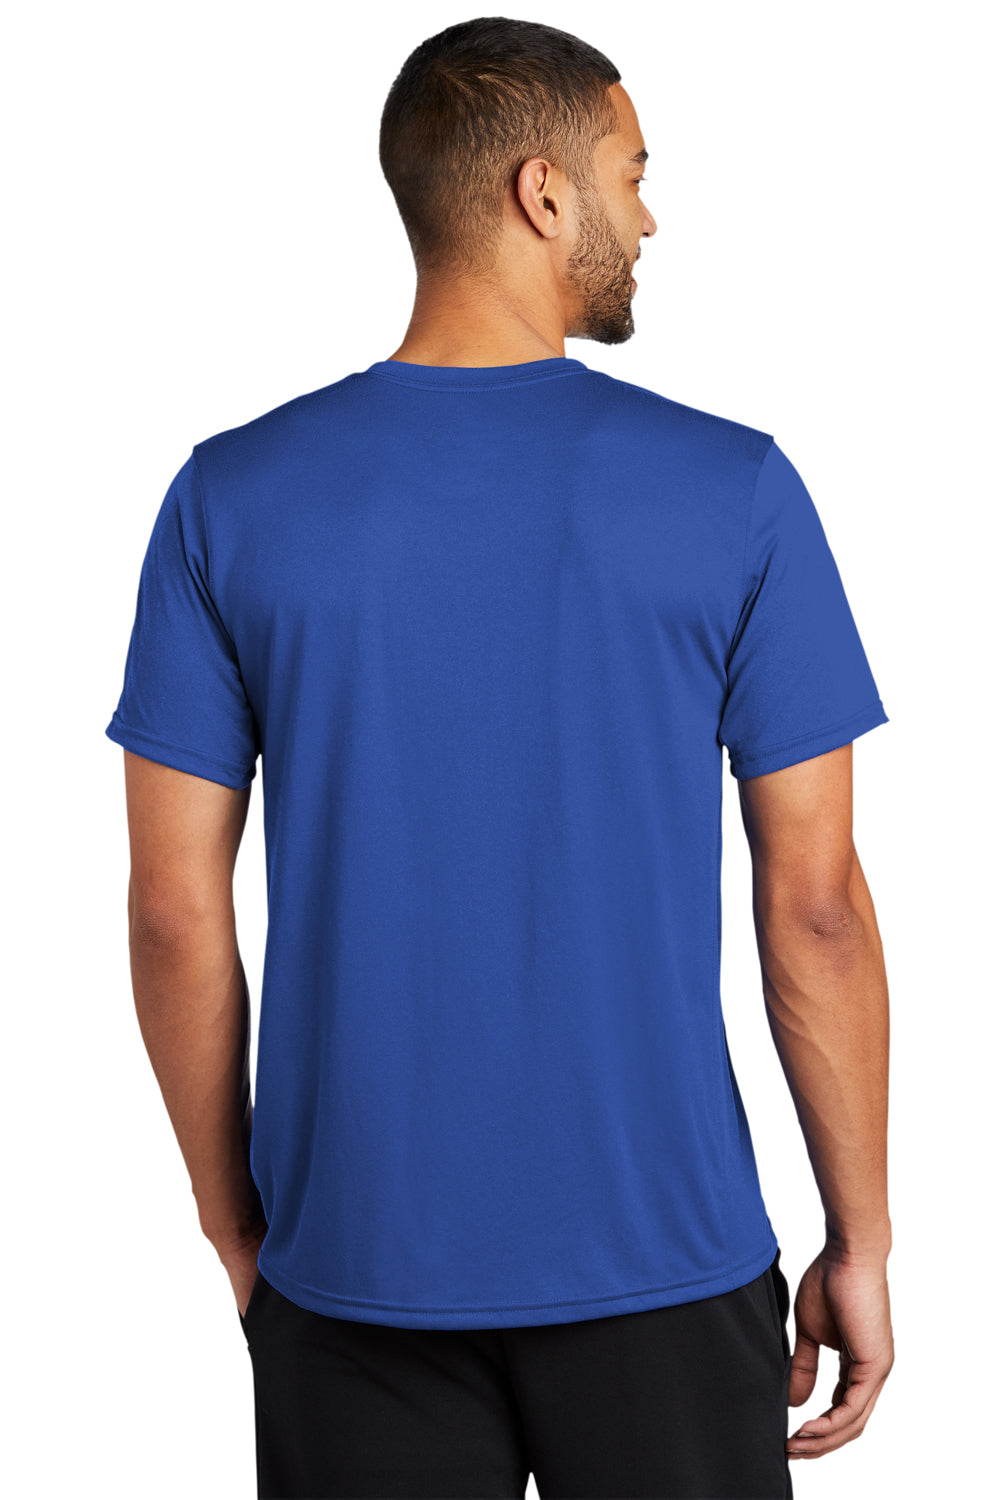 Nike 727982 Mens Legend Dri-Fit Moisture Wicking Short Sleeve Crewneck T-Shirt Game Royal Blue Model Back